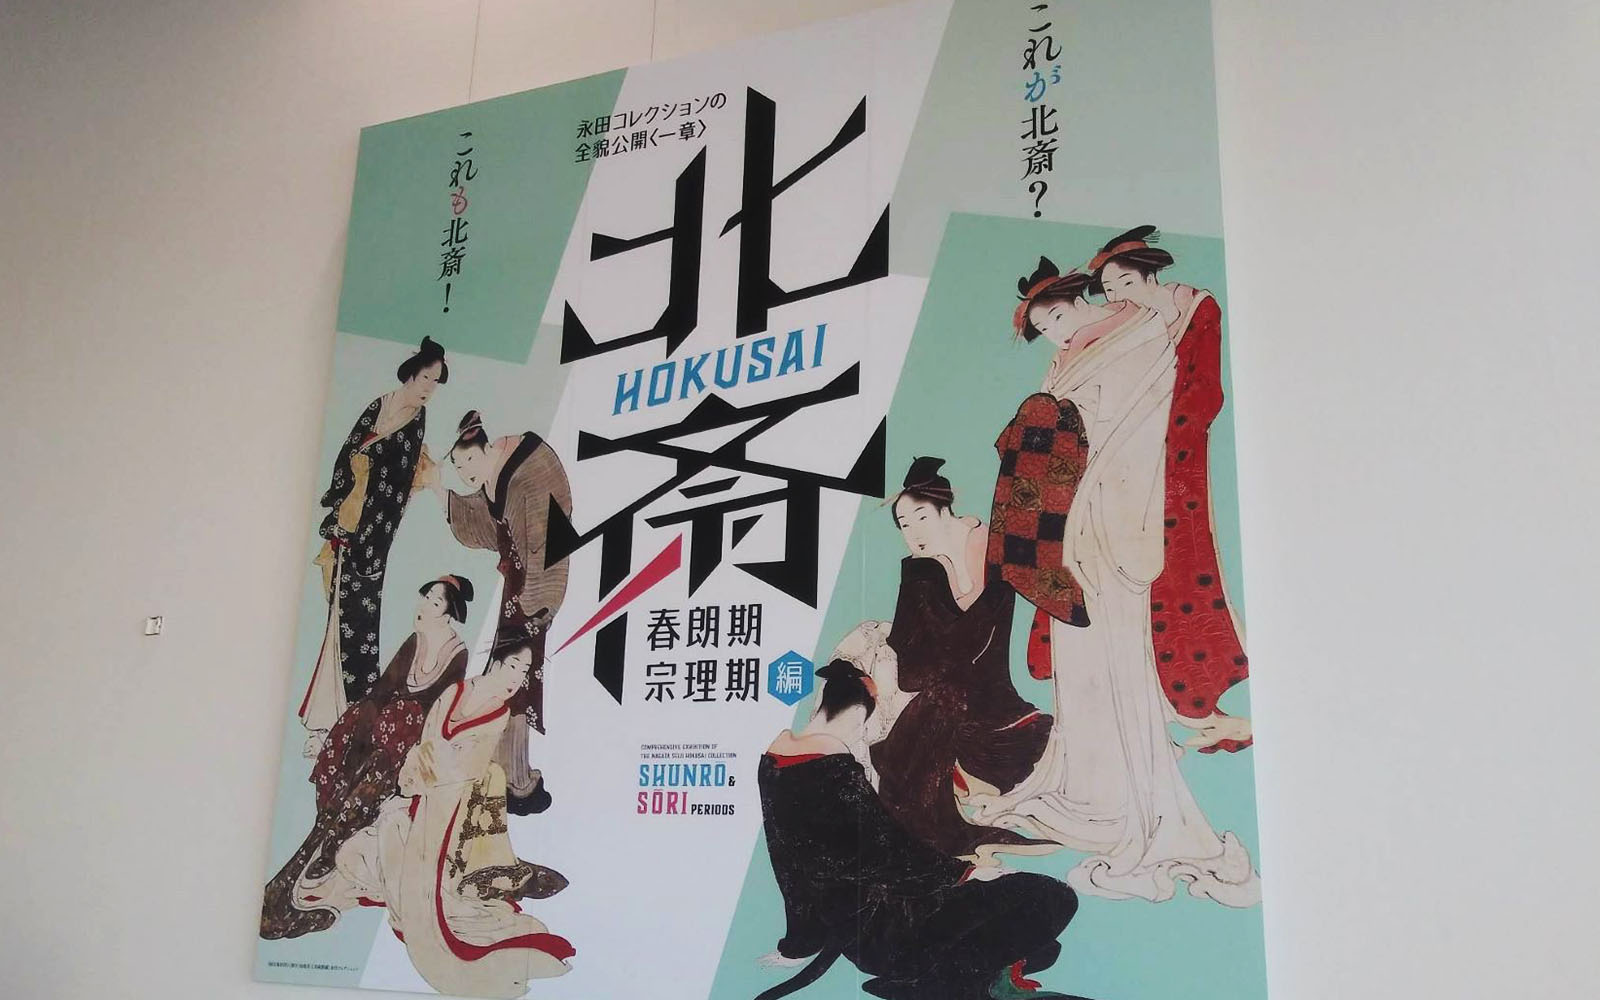 Shimane-Art-Museum-Hokusai-special-exhibit-poster.jpg